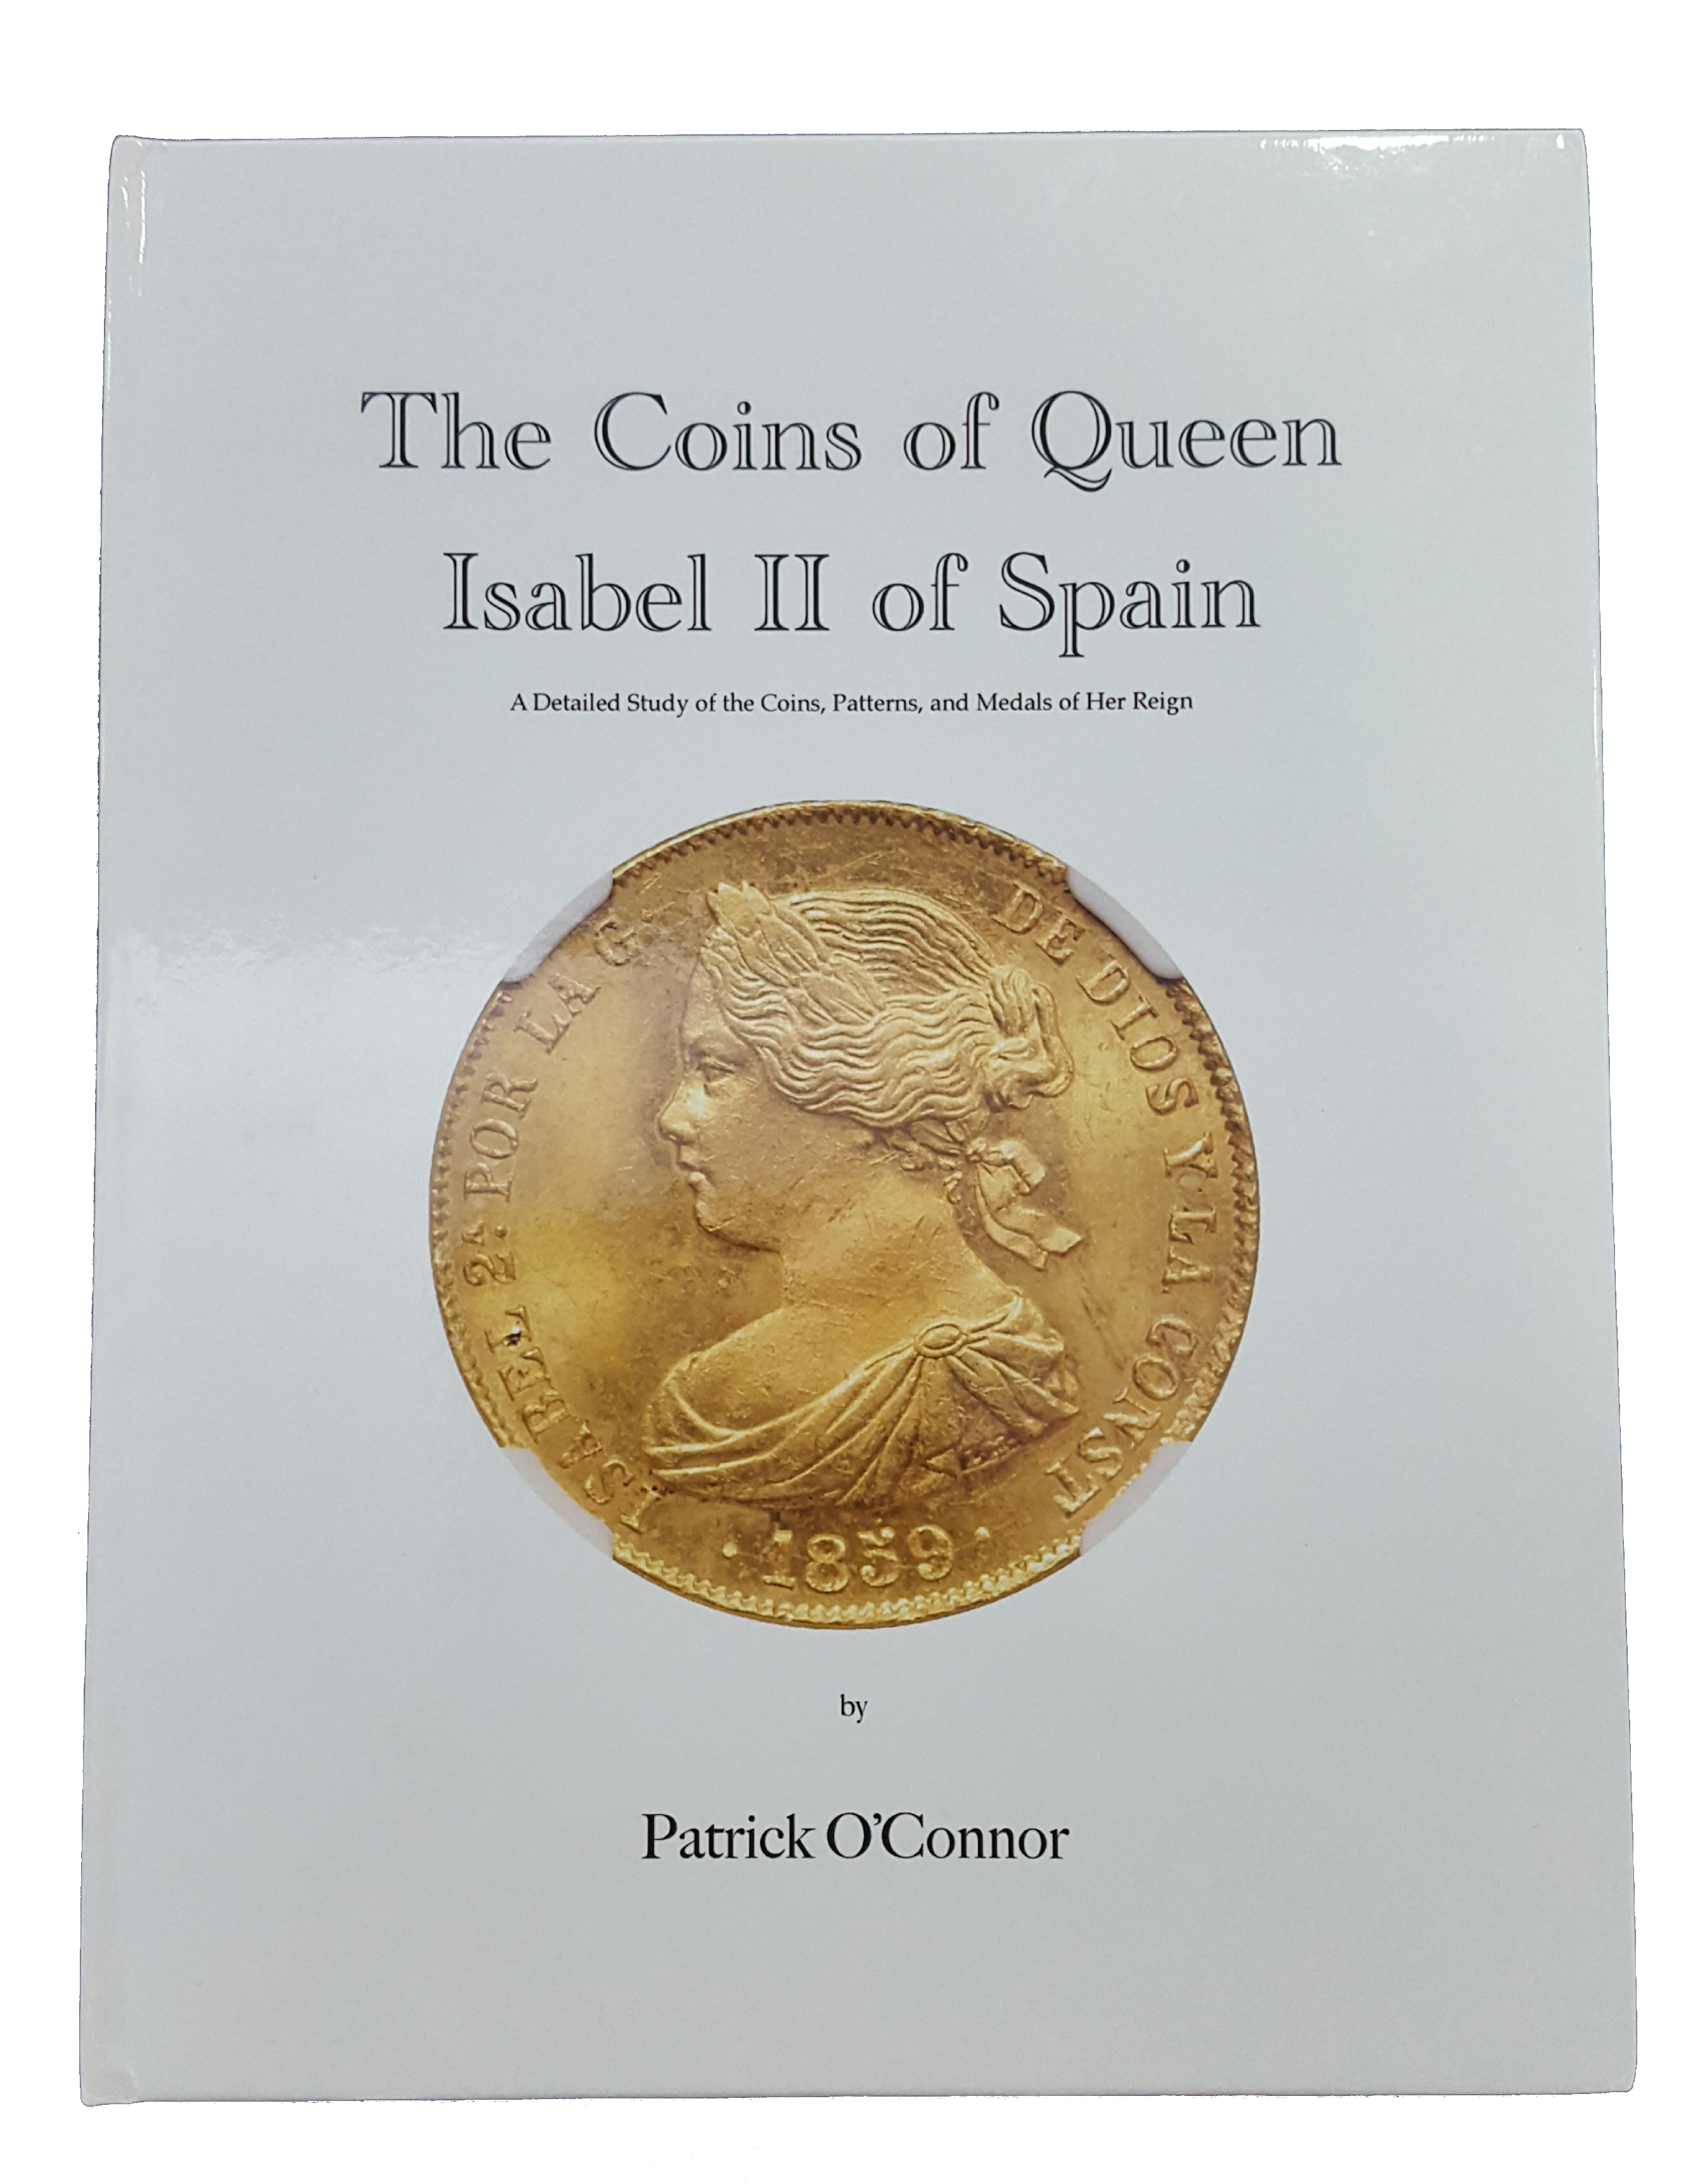 The Coins of Queen Isabel II of Spain